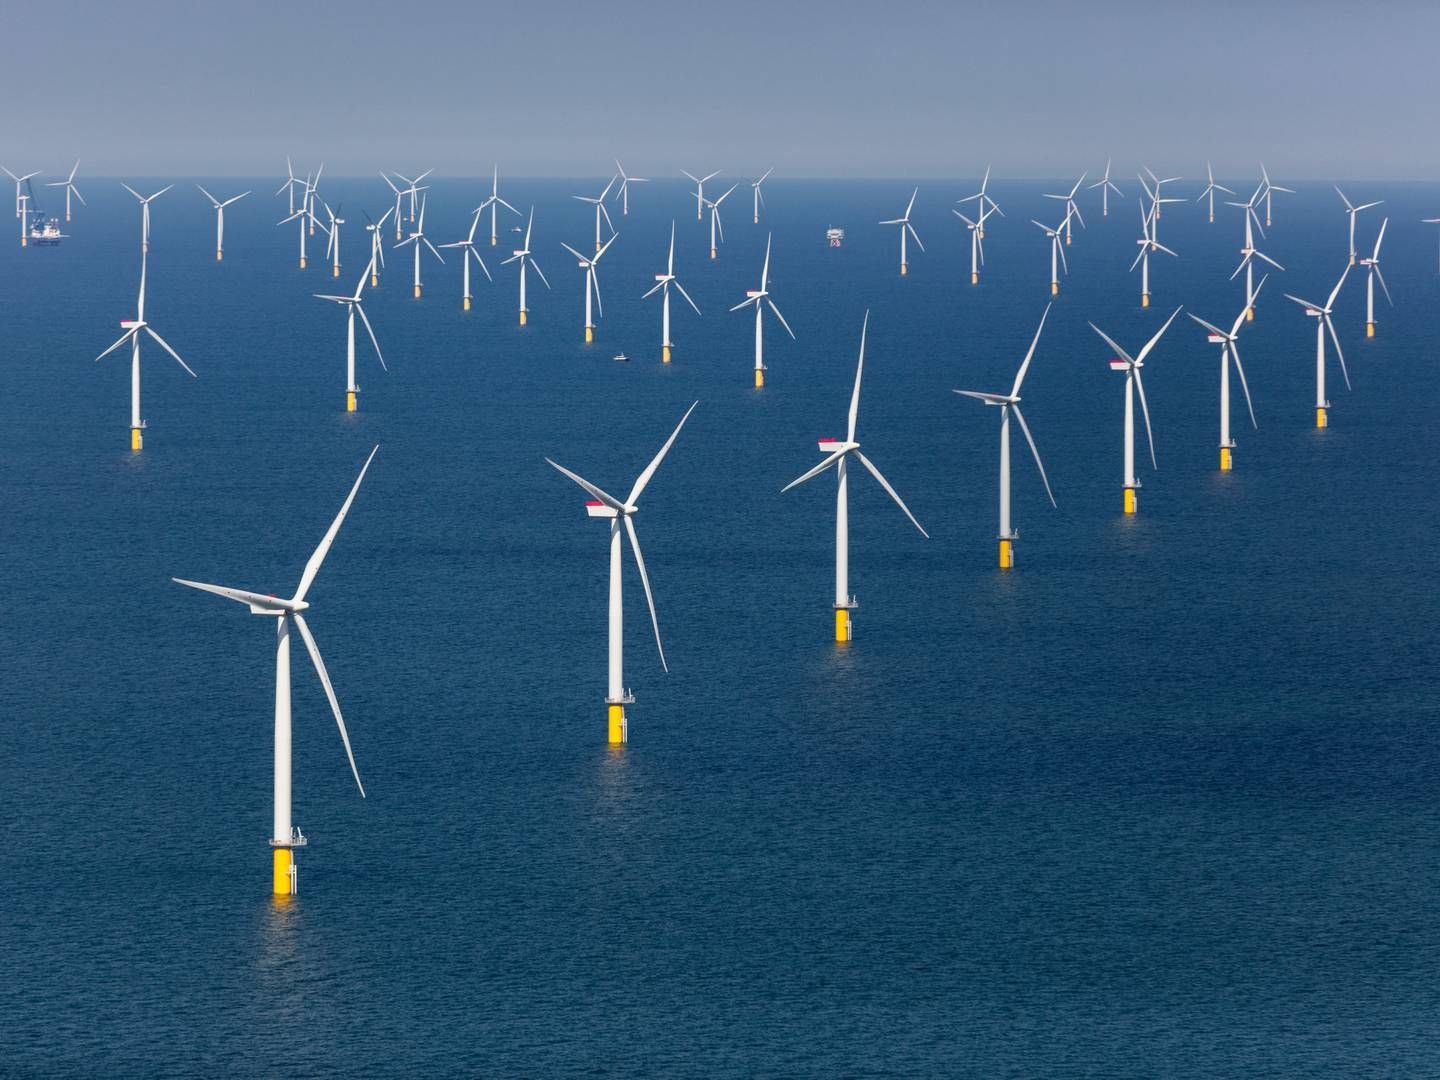 Siemens Gamesa supplies wind turbines for the OSW off the coast of Scotland. | Photo: Siemens Gamesa